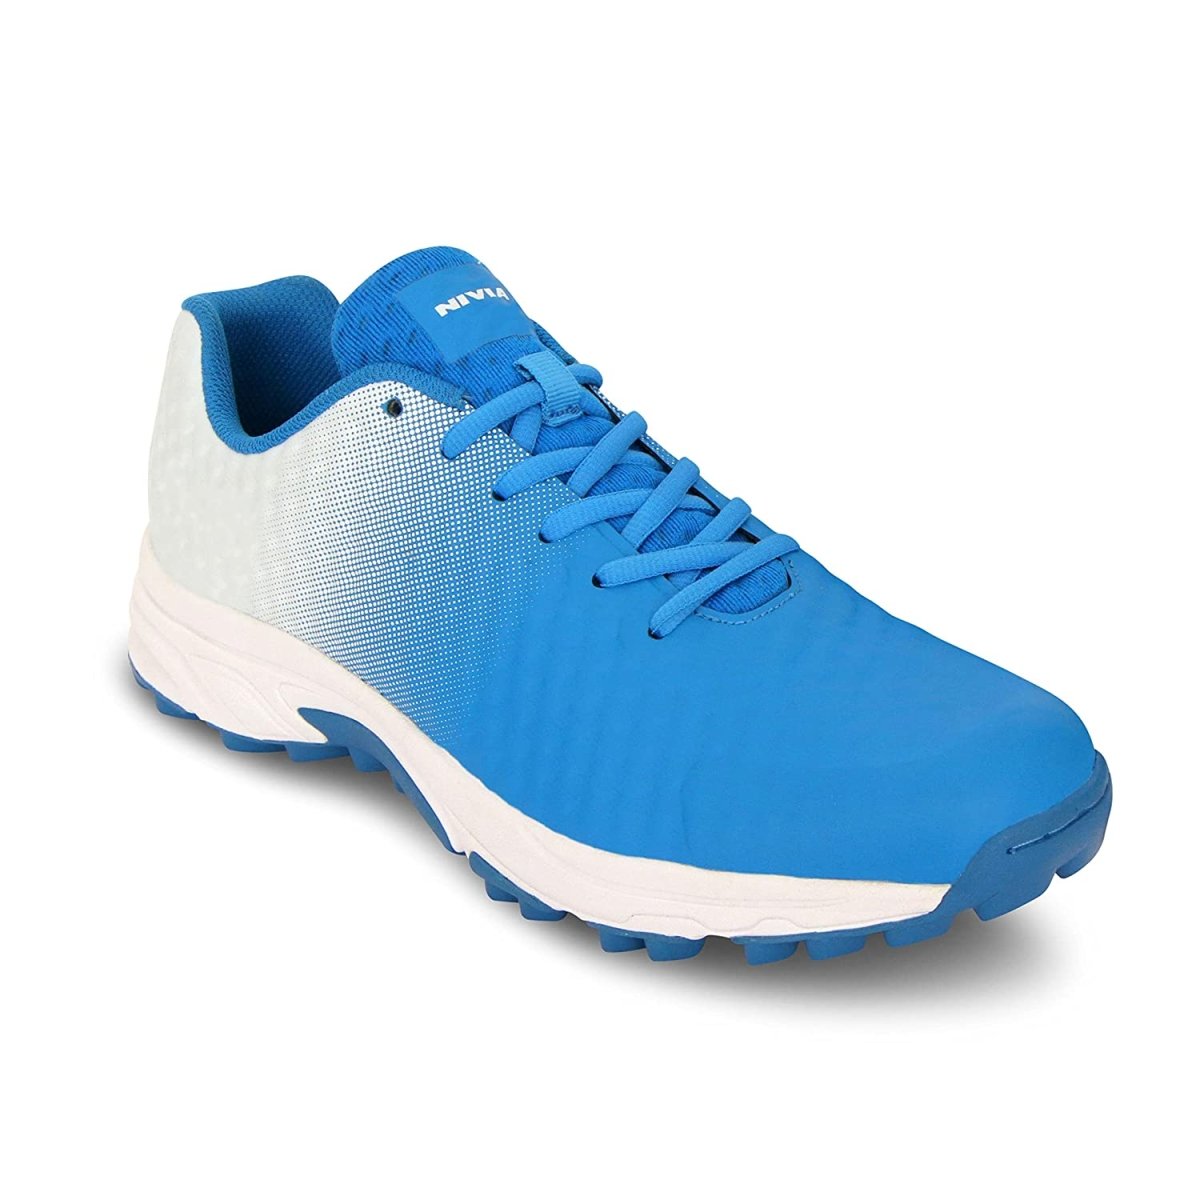 Nivia Crick 1000 Cricket Shoes - Blue/White-Cricket Shoes-Pro Sports